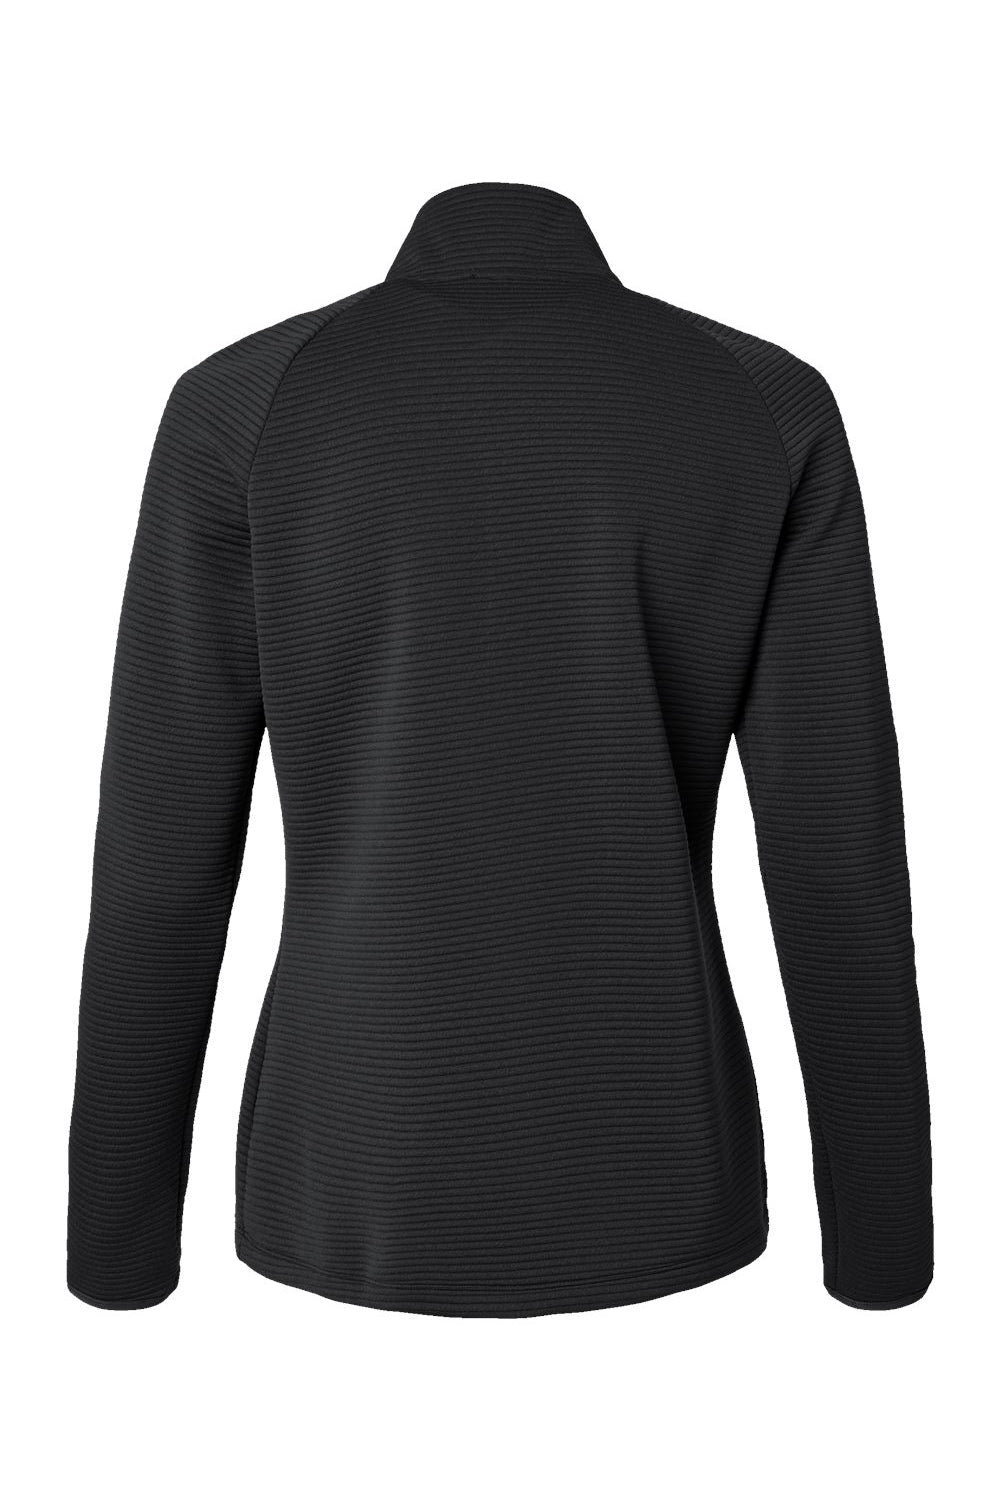 Adidas A589 Womens Spacer 1/4 Zip Sweatshirt Black Flat Back